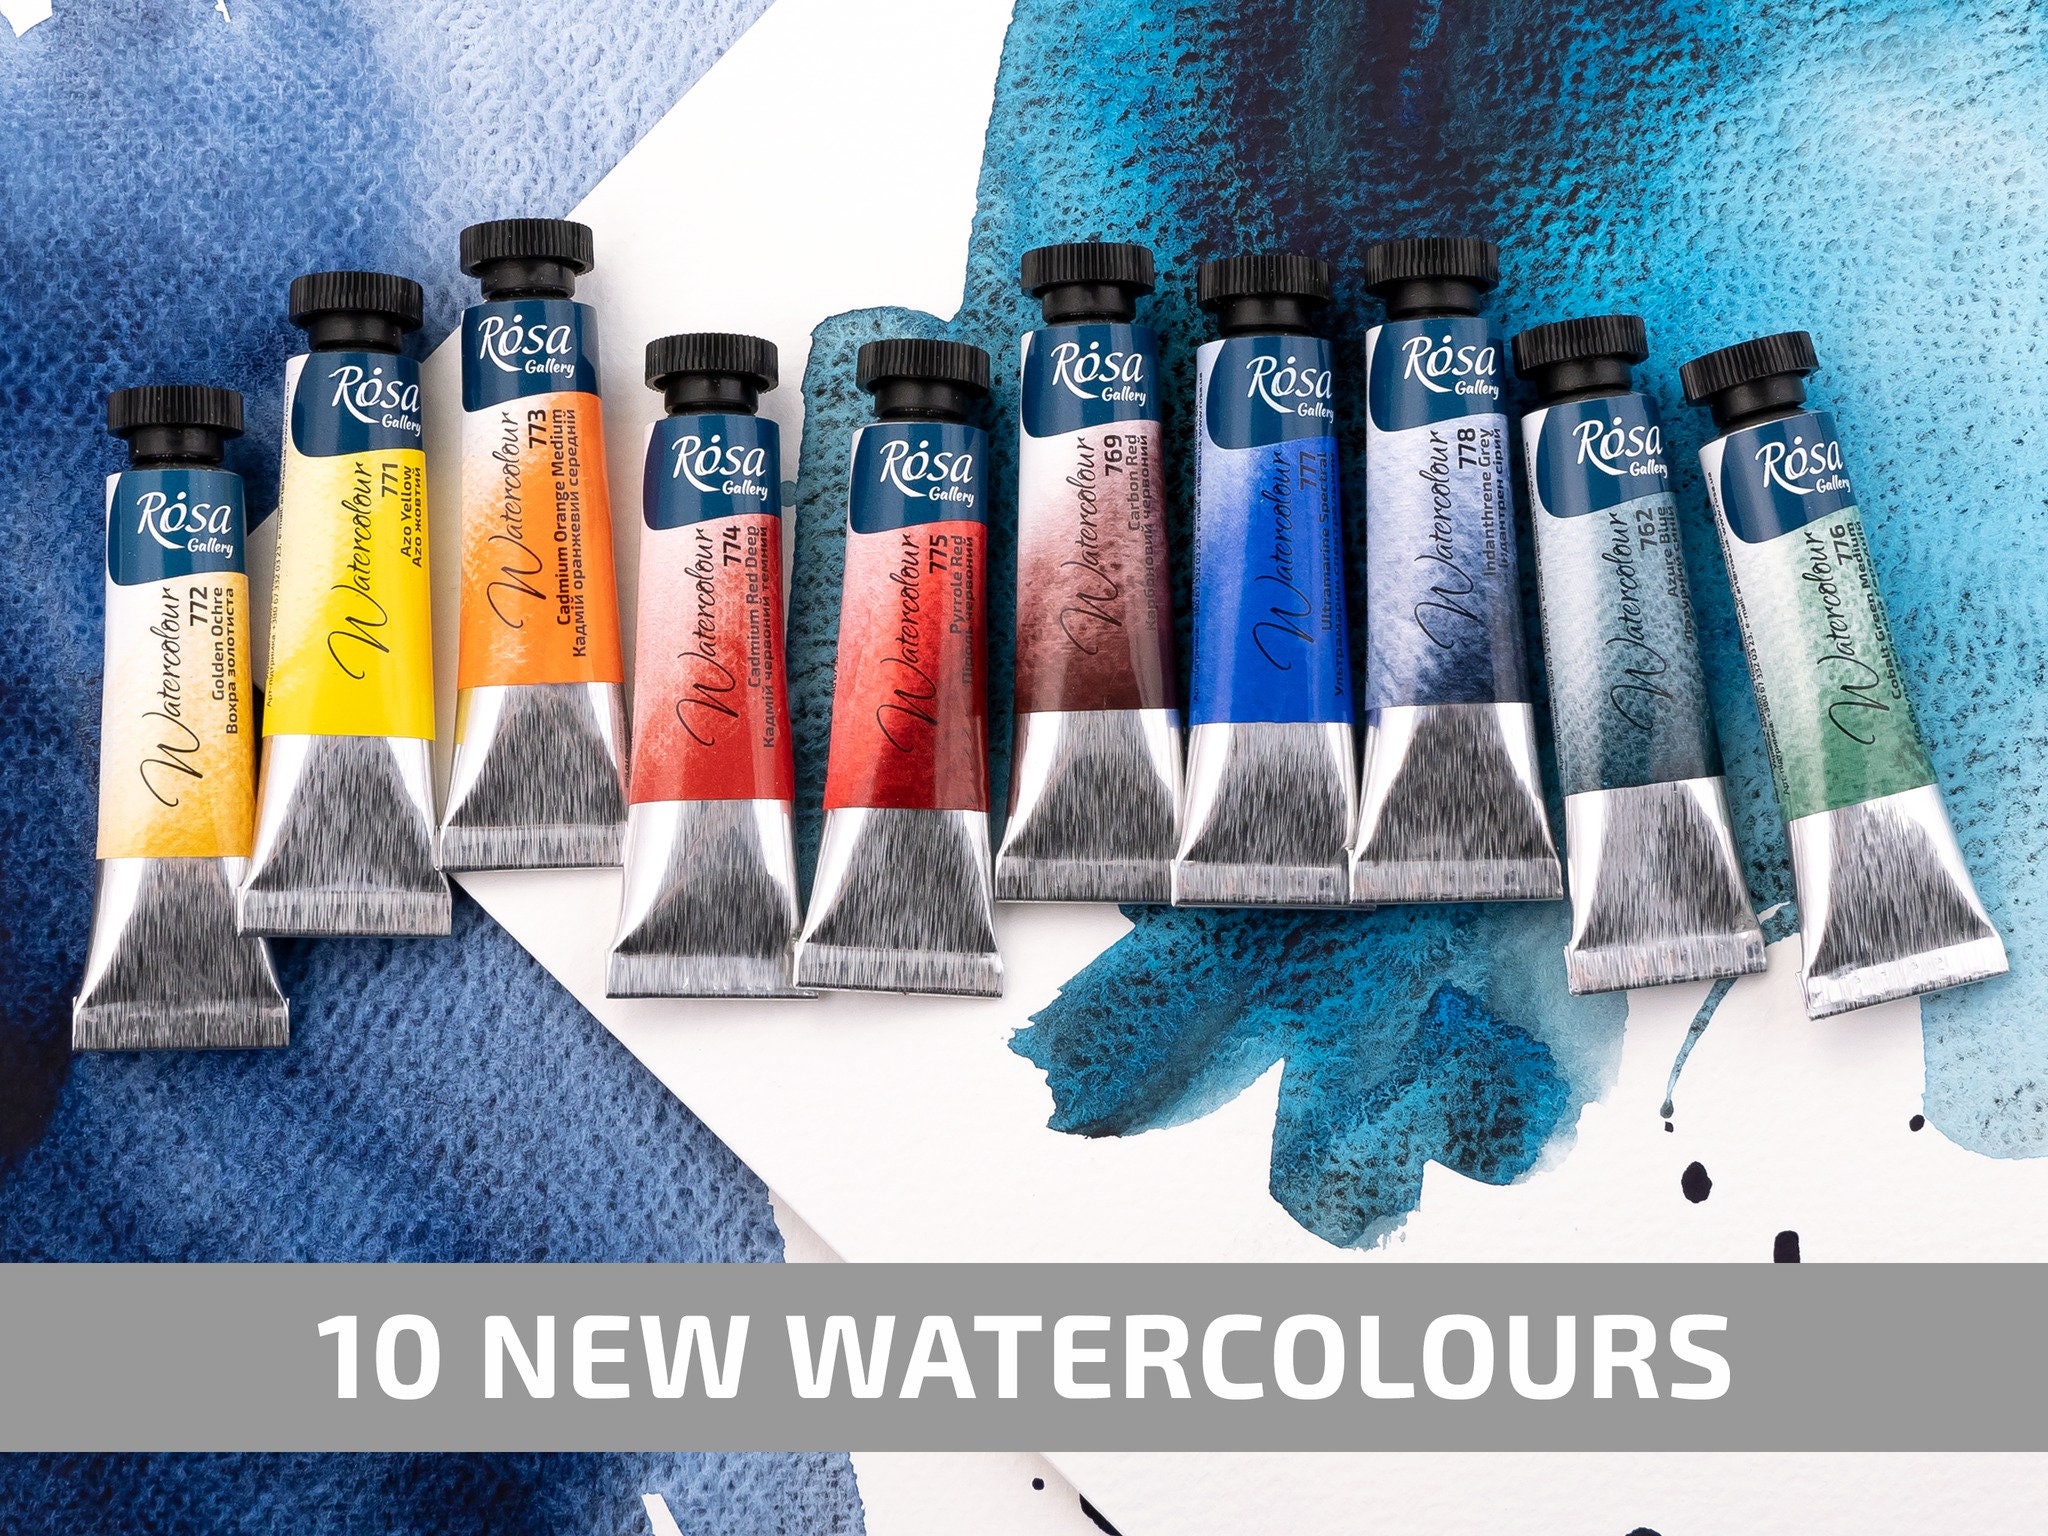 36 Watercolor Pencils, Derwent Inktense Watercolor Water Soluble Pencils  4mm Core Derwent Drawing Watercolor Pencil, Tin 